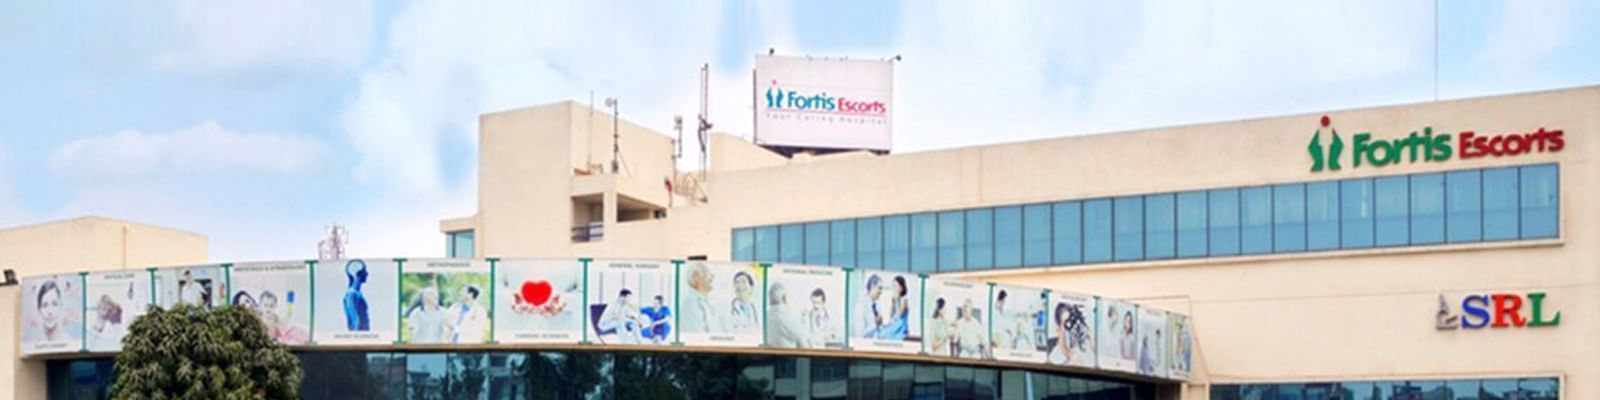 Fortis Escorts Hospital - Faridabad